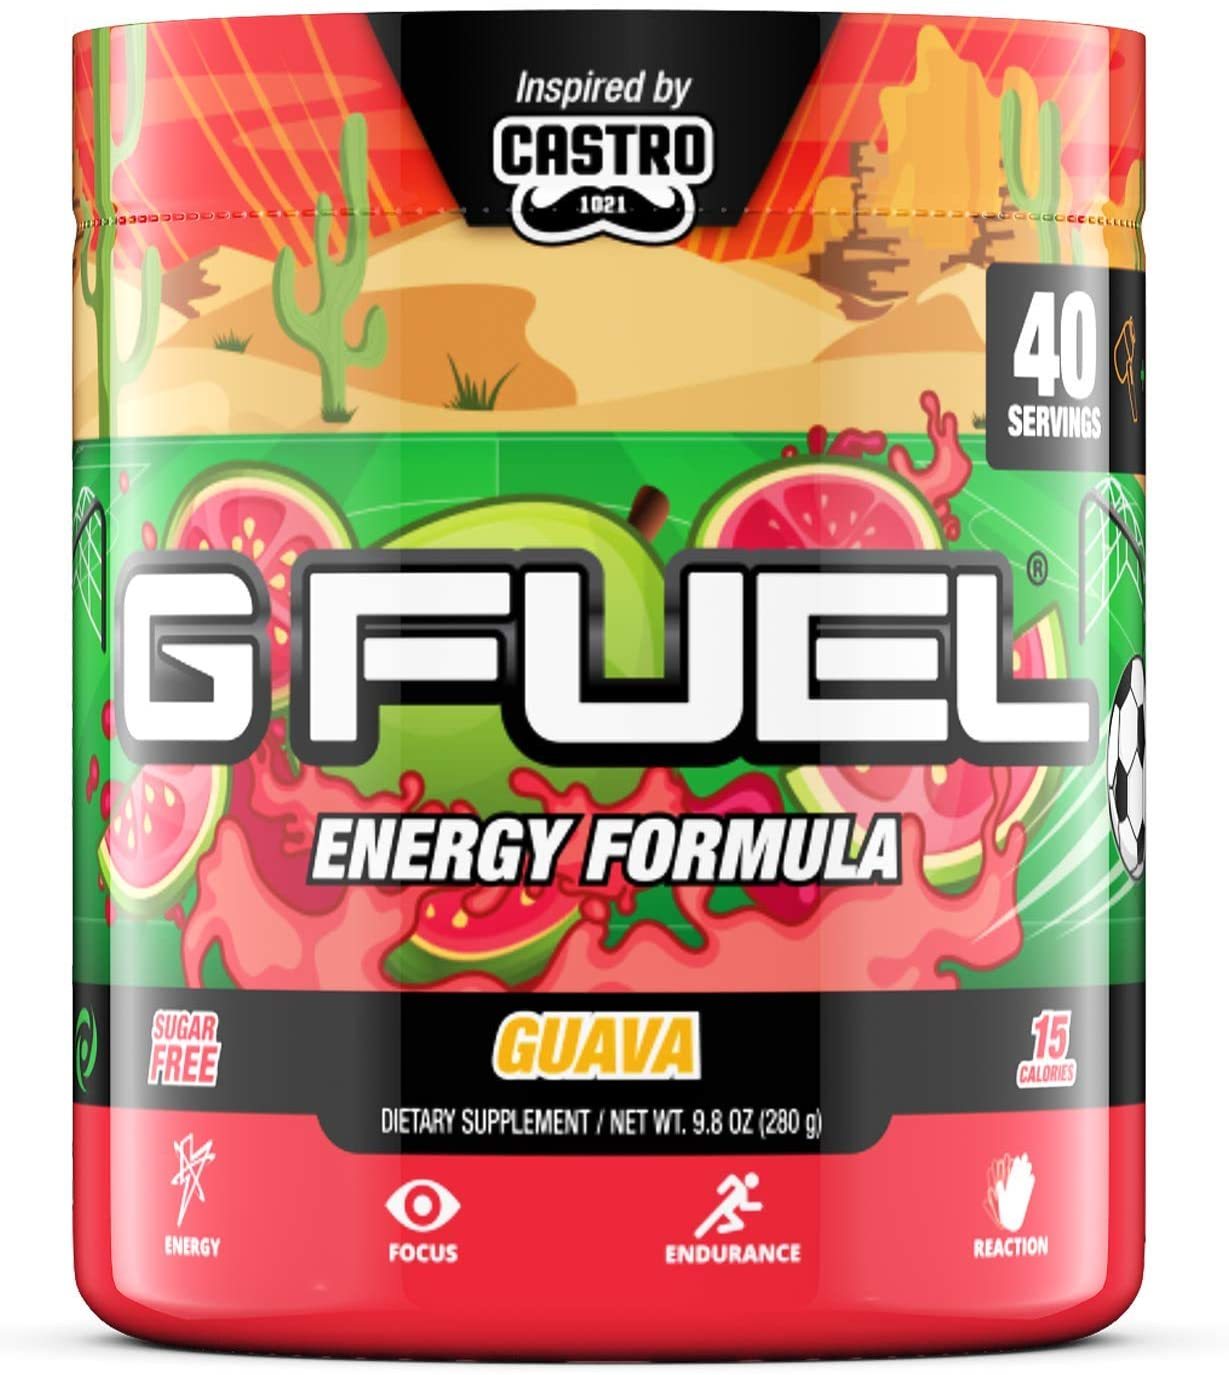 GFuel energy formula - Guava - Store 974 | ستور ٩٧٤